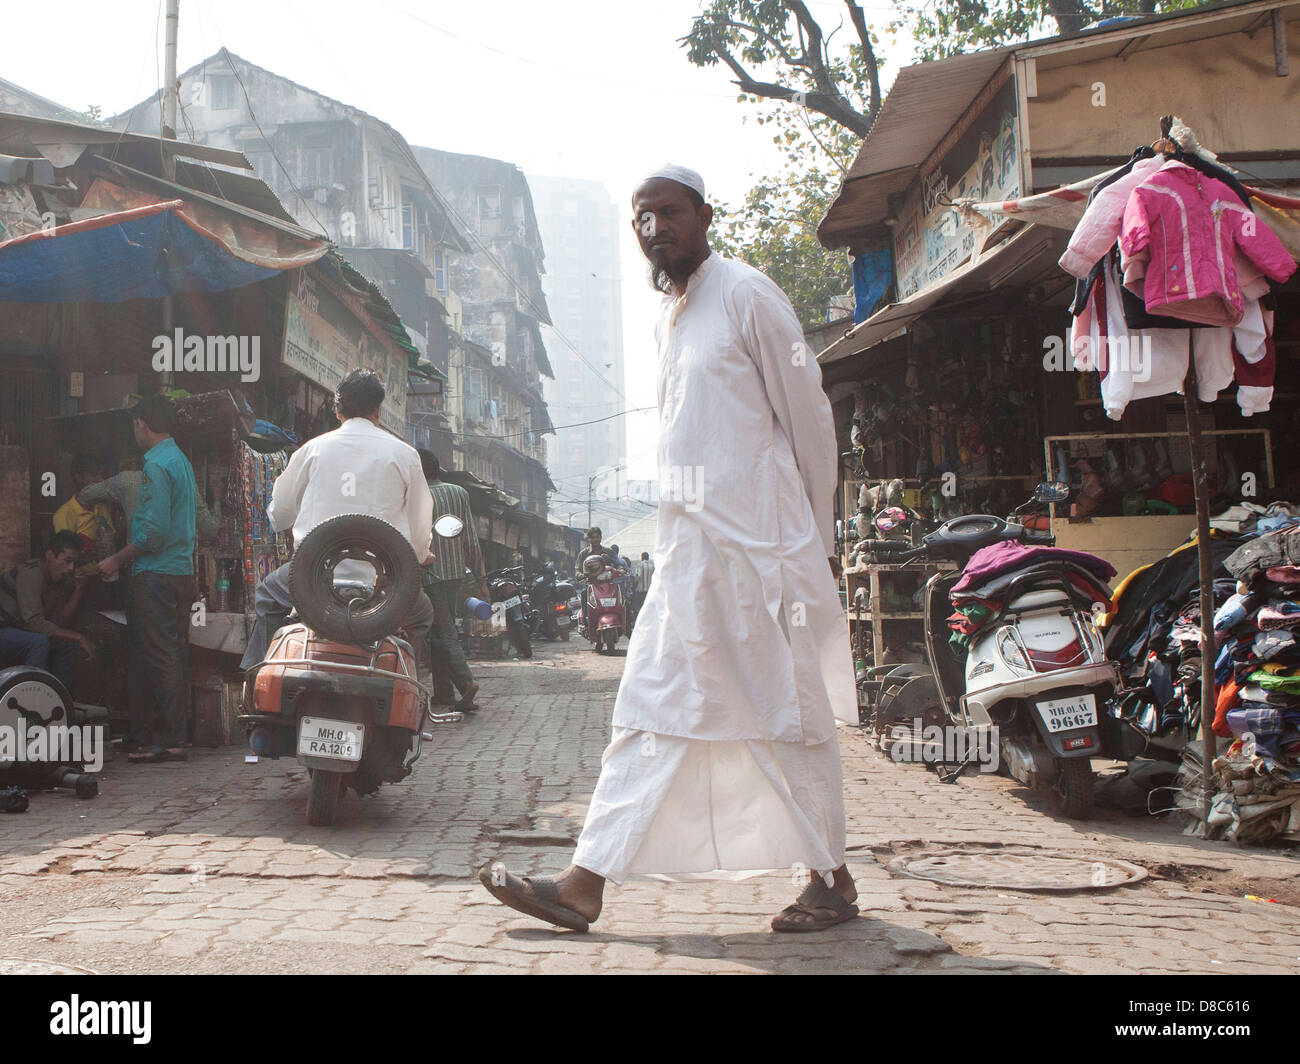 A man in muslim dress walking along a street in Mumbai, India Stock Photo